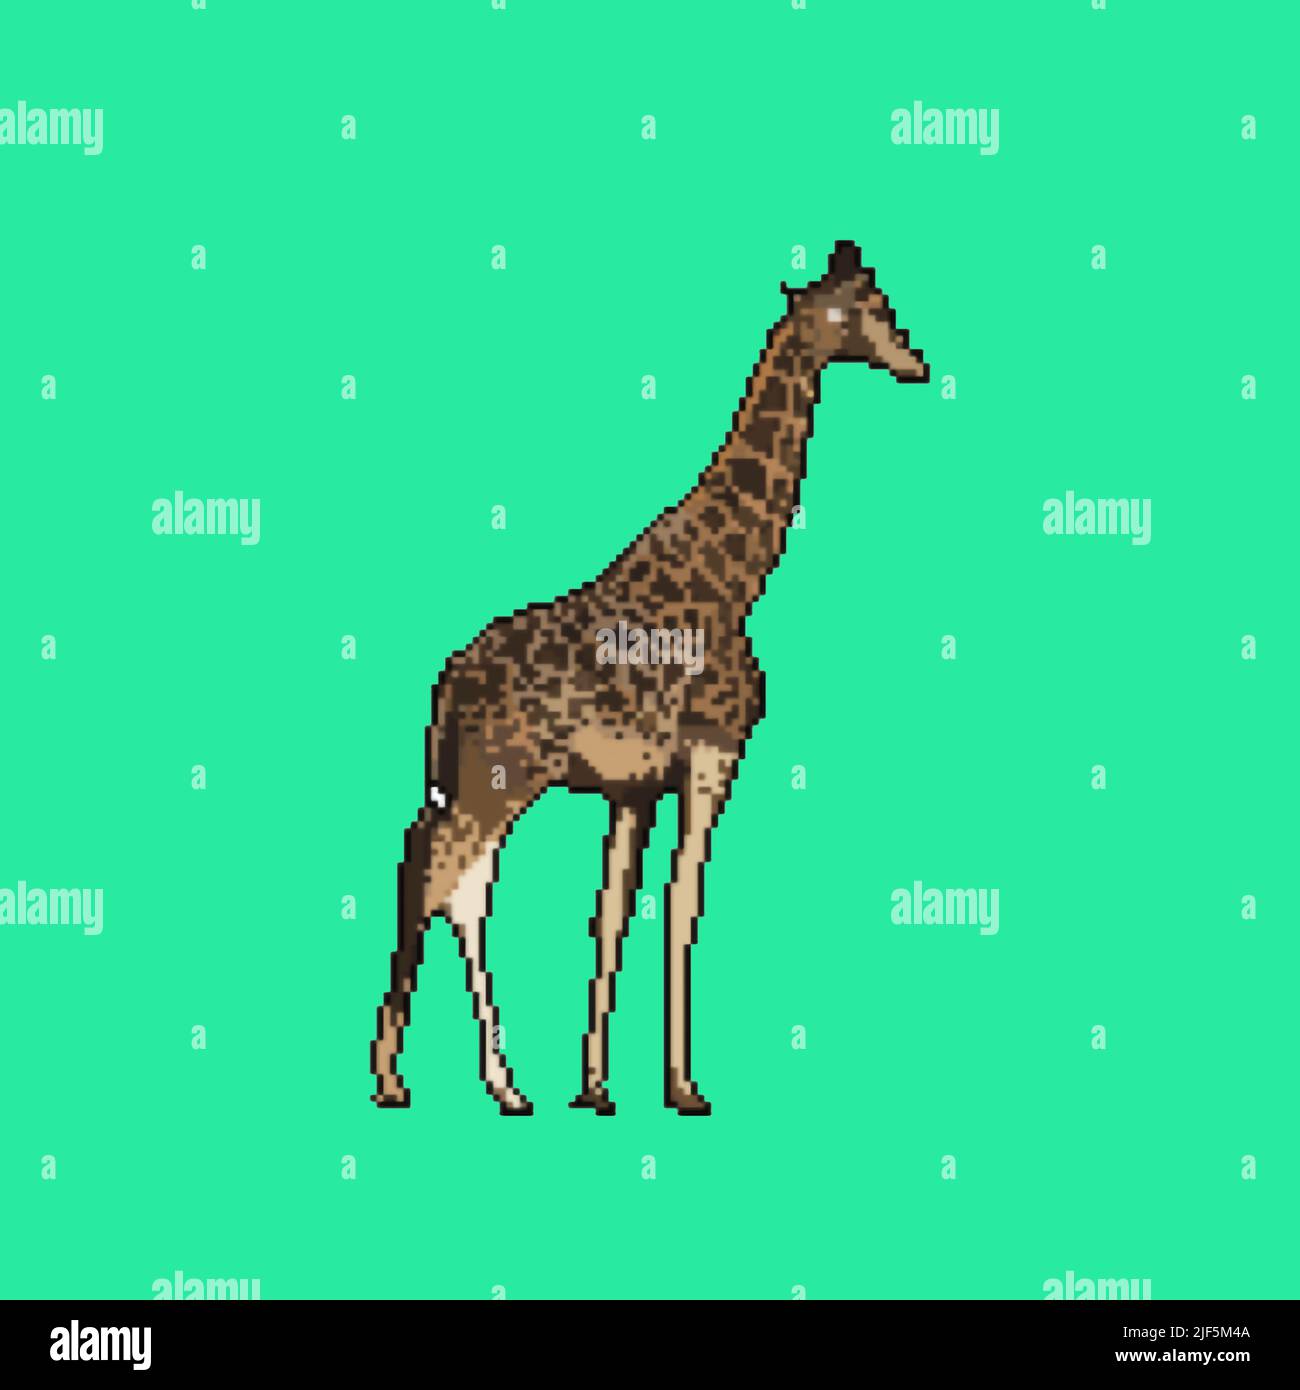 Pixel art giraffe on green background, 3D rendering Stock Photo